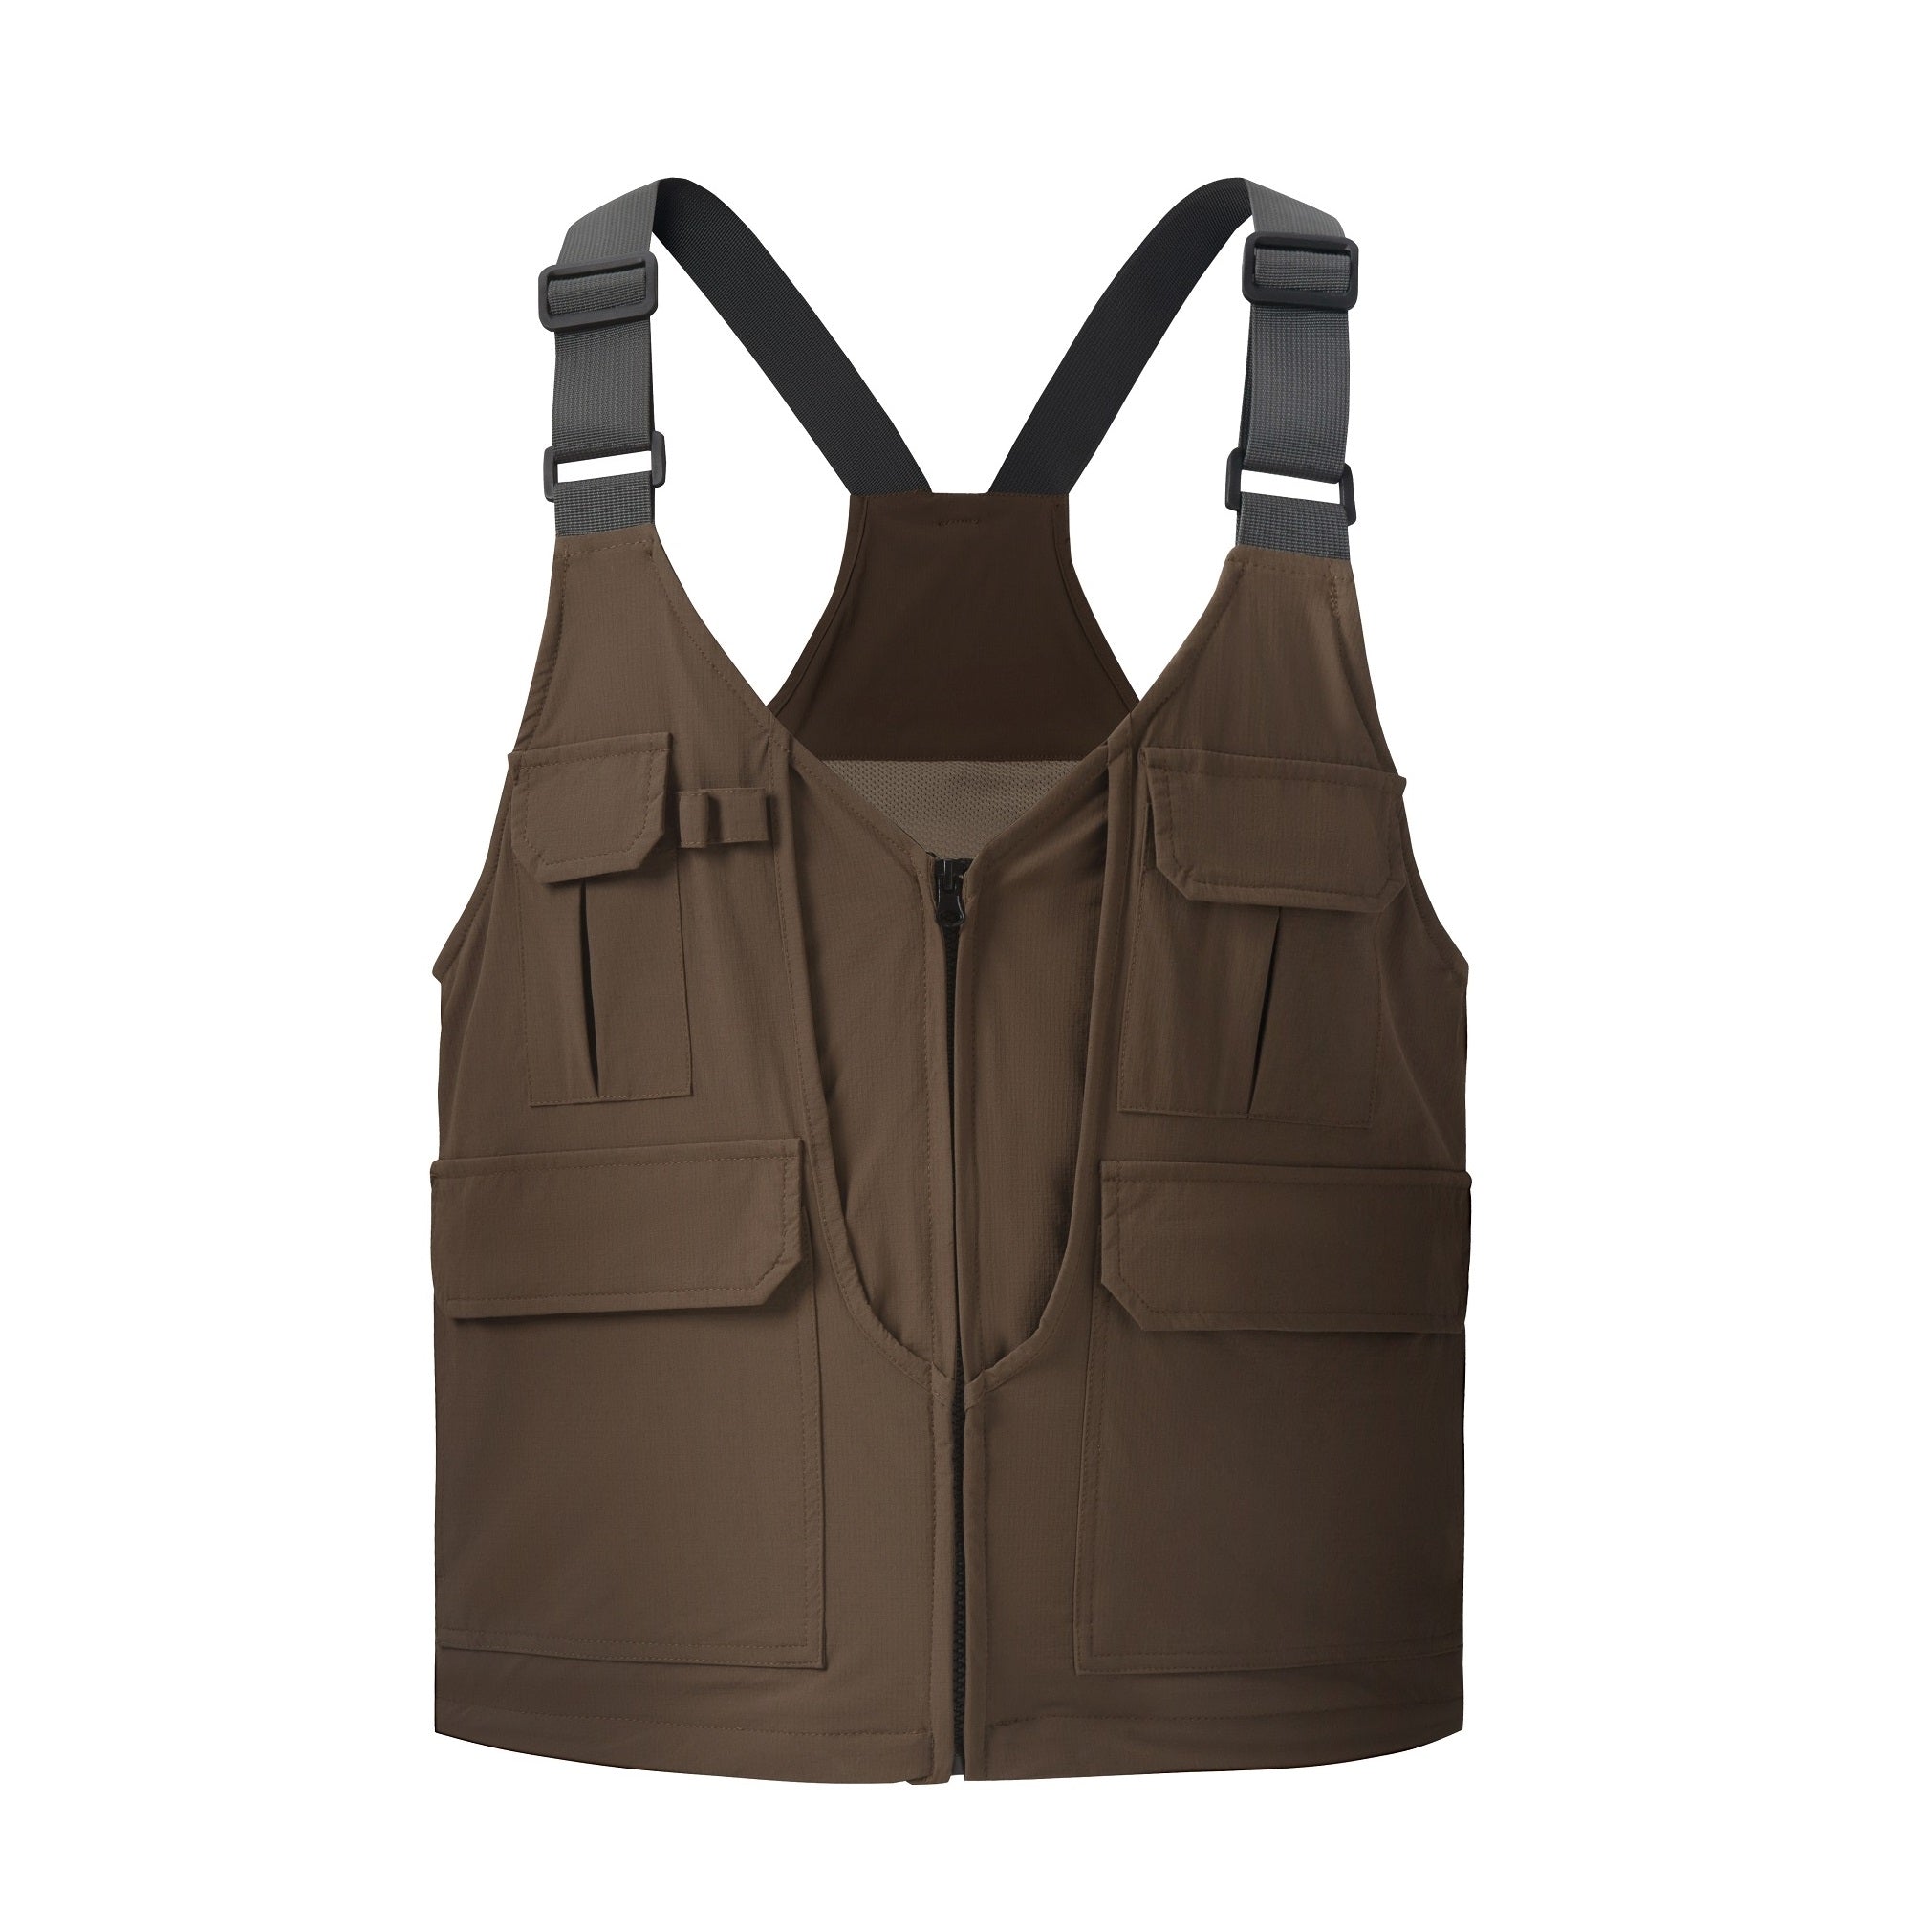 TerraOmni Vest(1)- Your Outdoor Vest That Transforms into a Shopping Bag